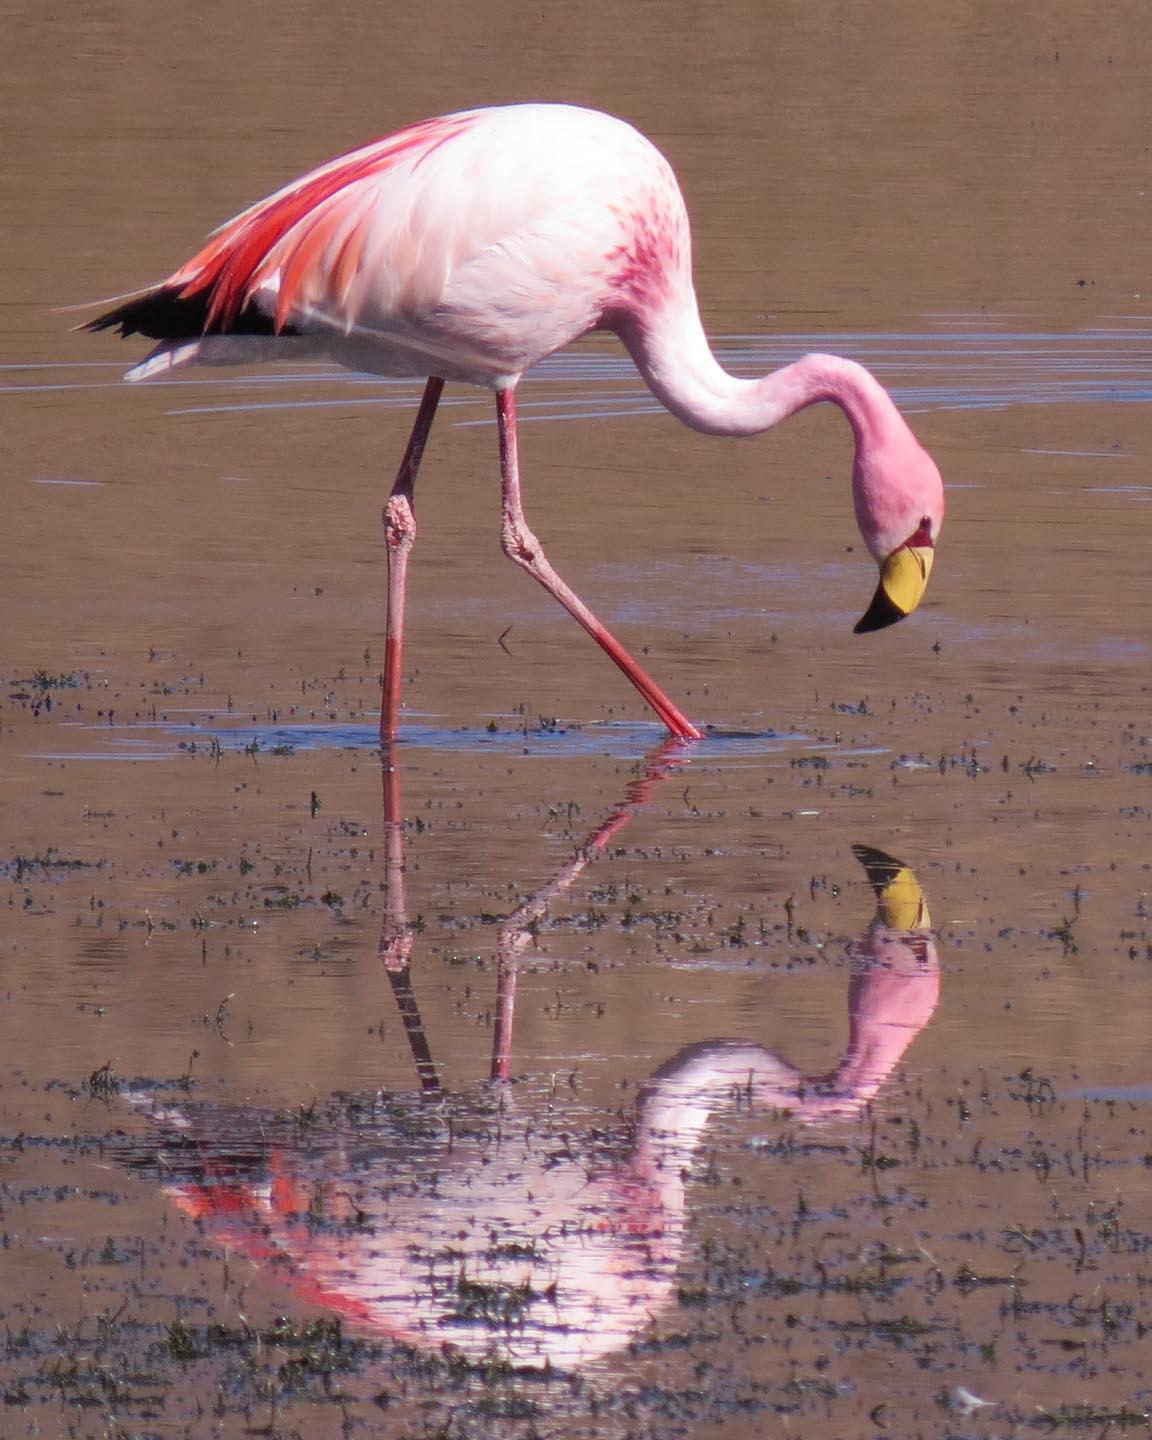 James's Flamingo Photo by Peter Boesman